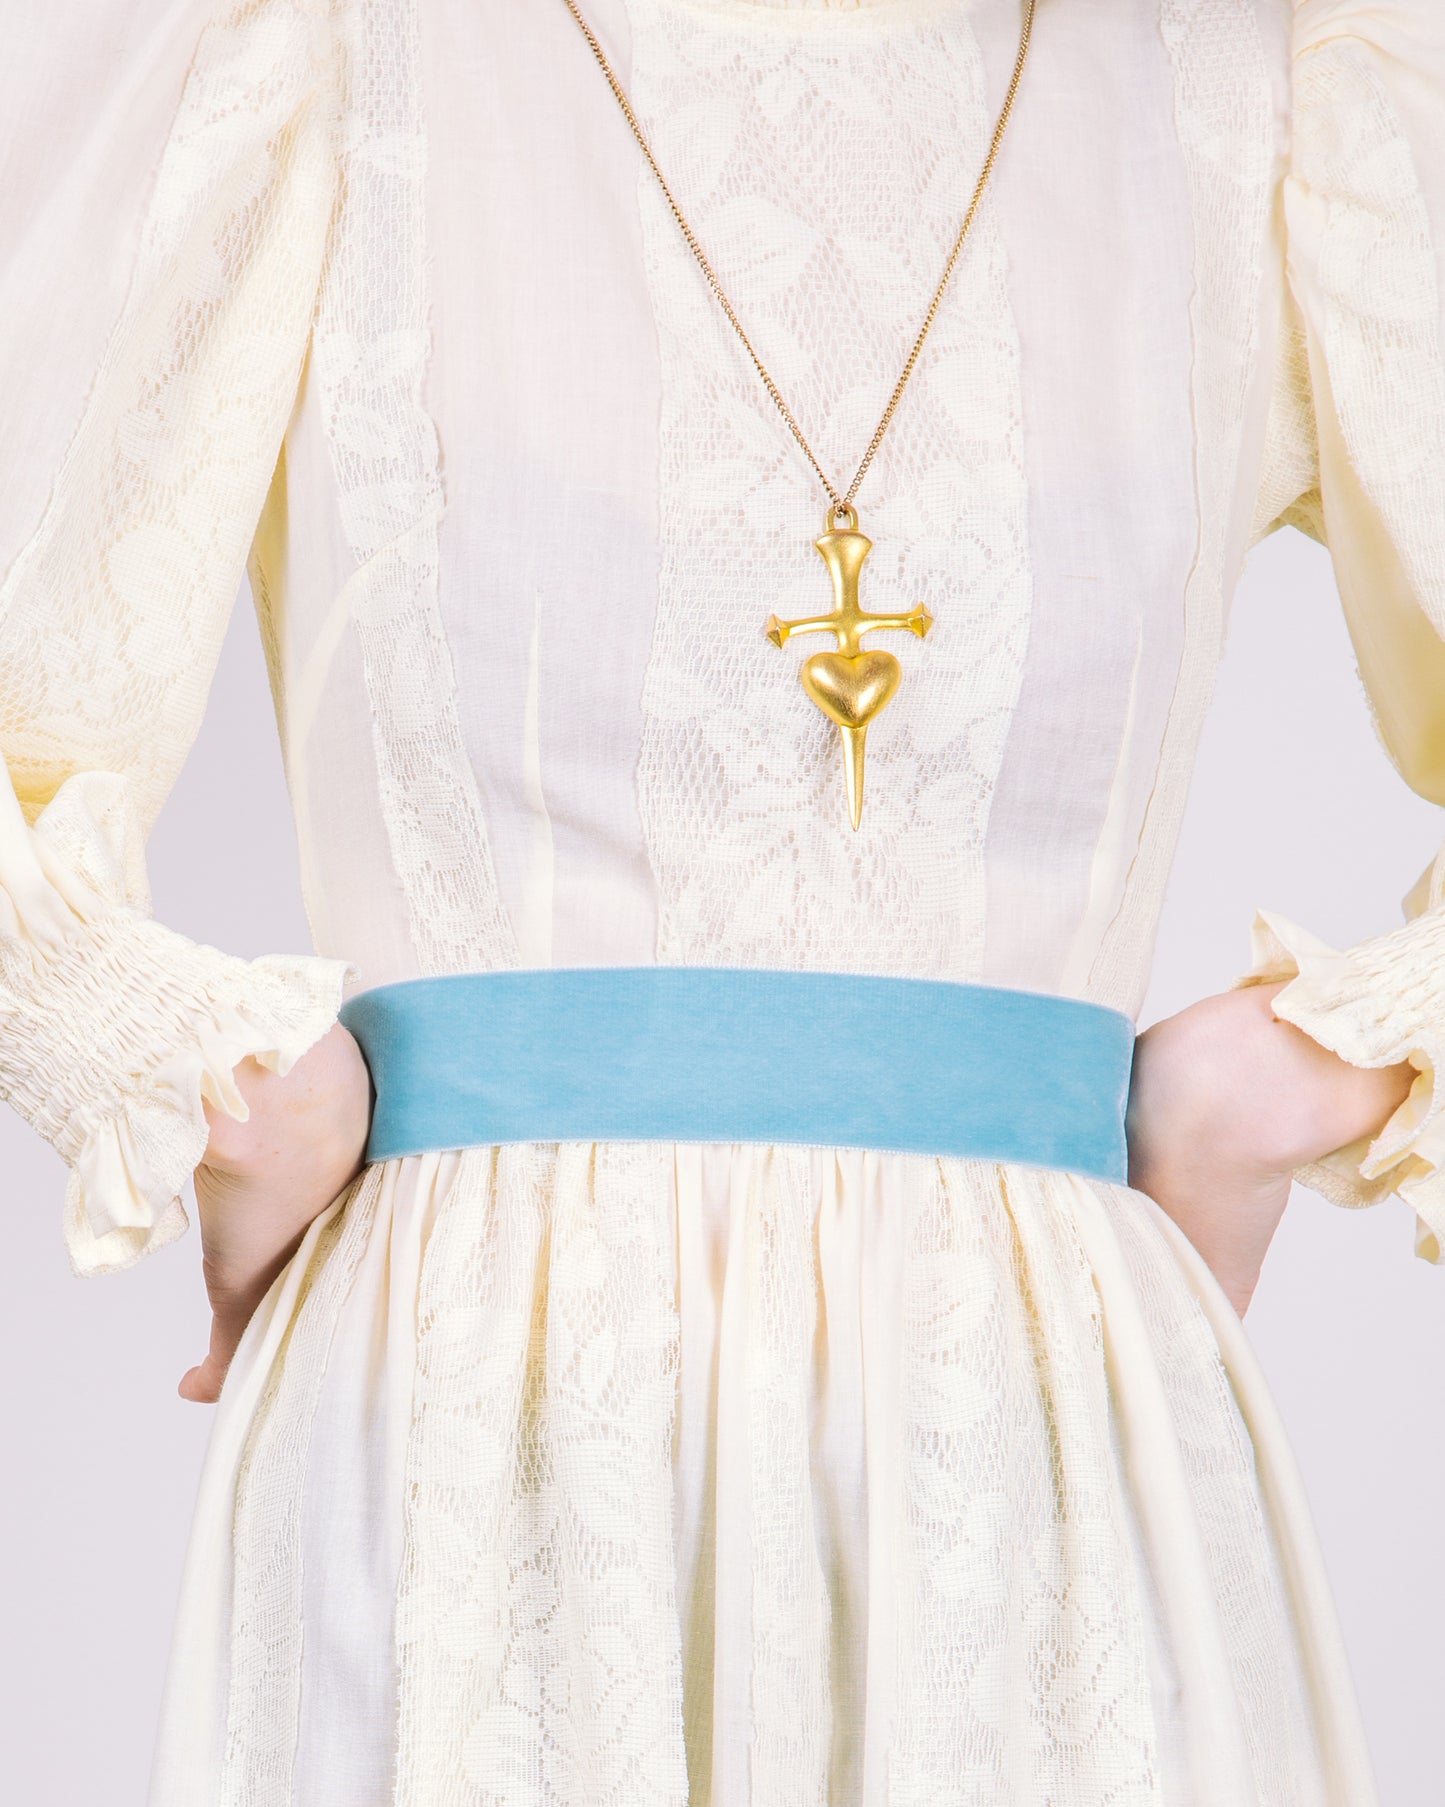 The Agatha Prairie Dress in Ivory Lace Cotton